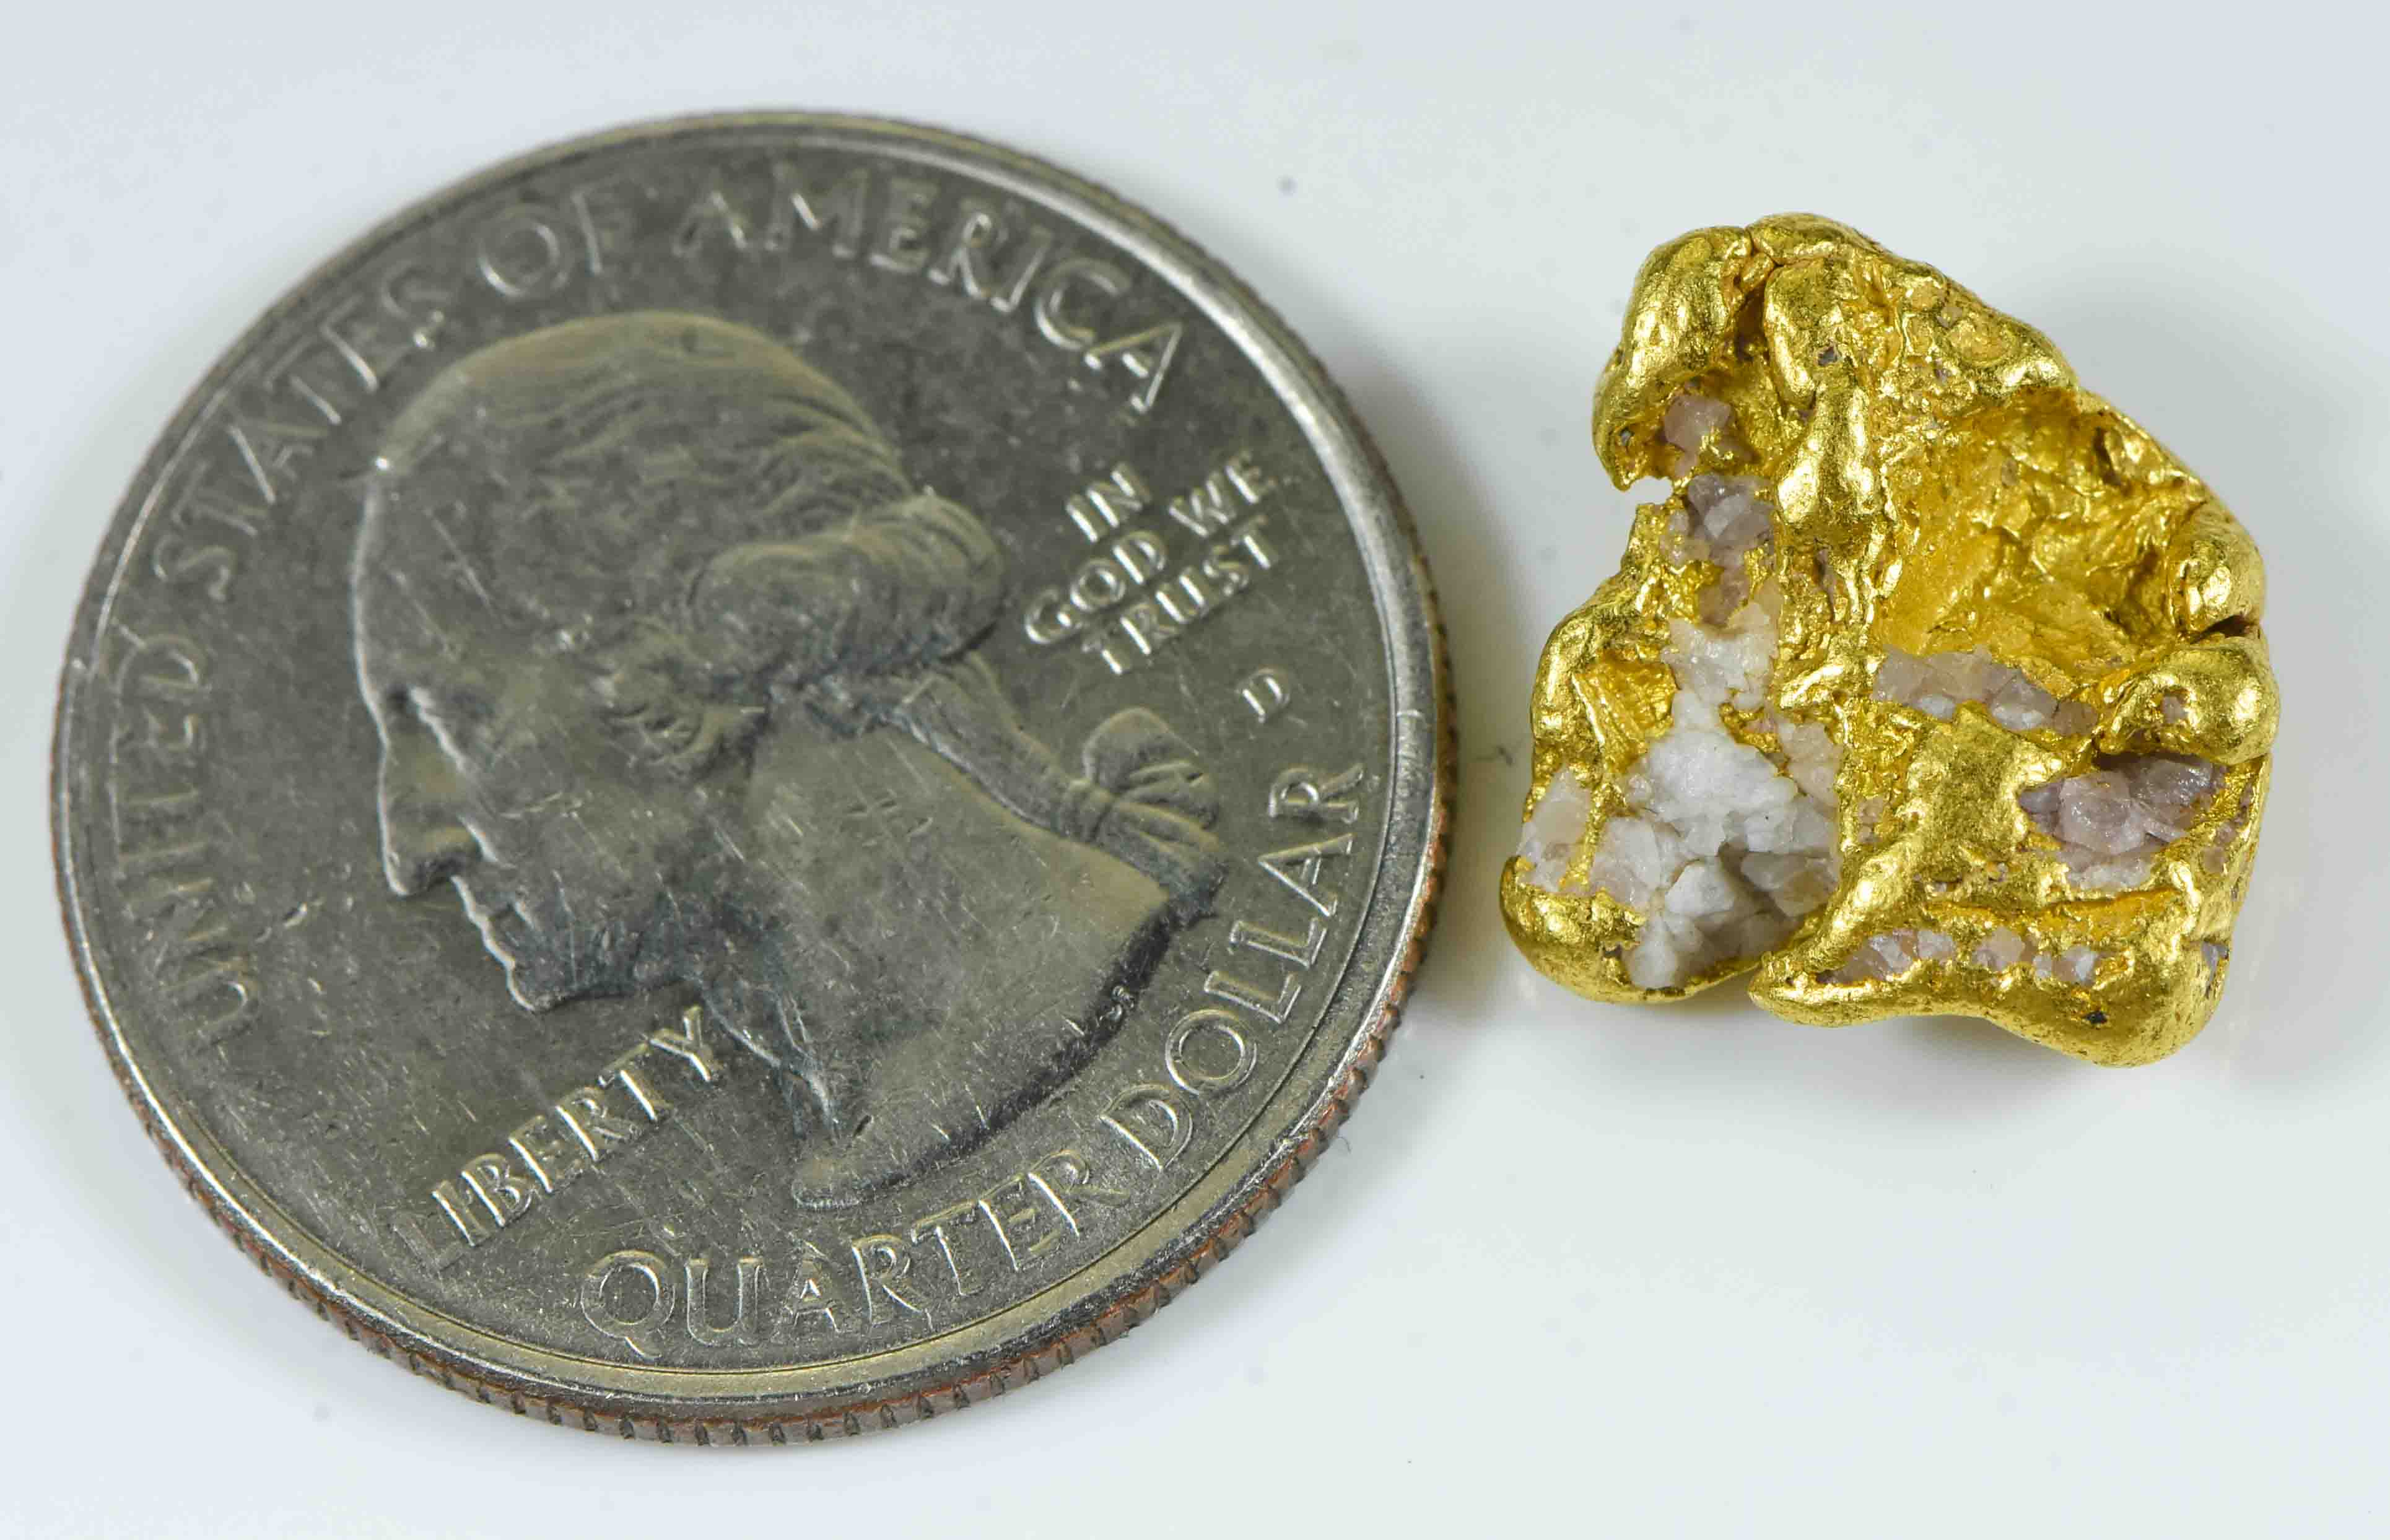 QN-94 "Alaskan BC Gold Nuggets with Quartz" Genuine 4.38 Grams